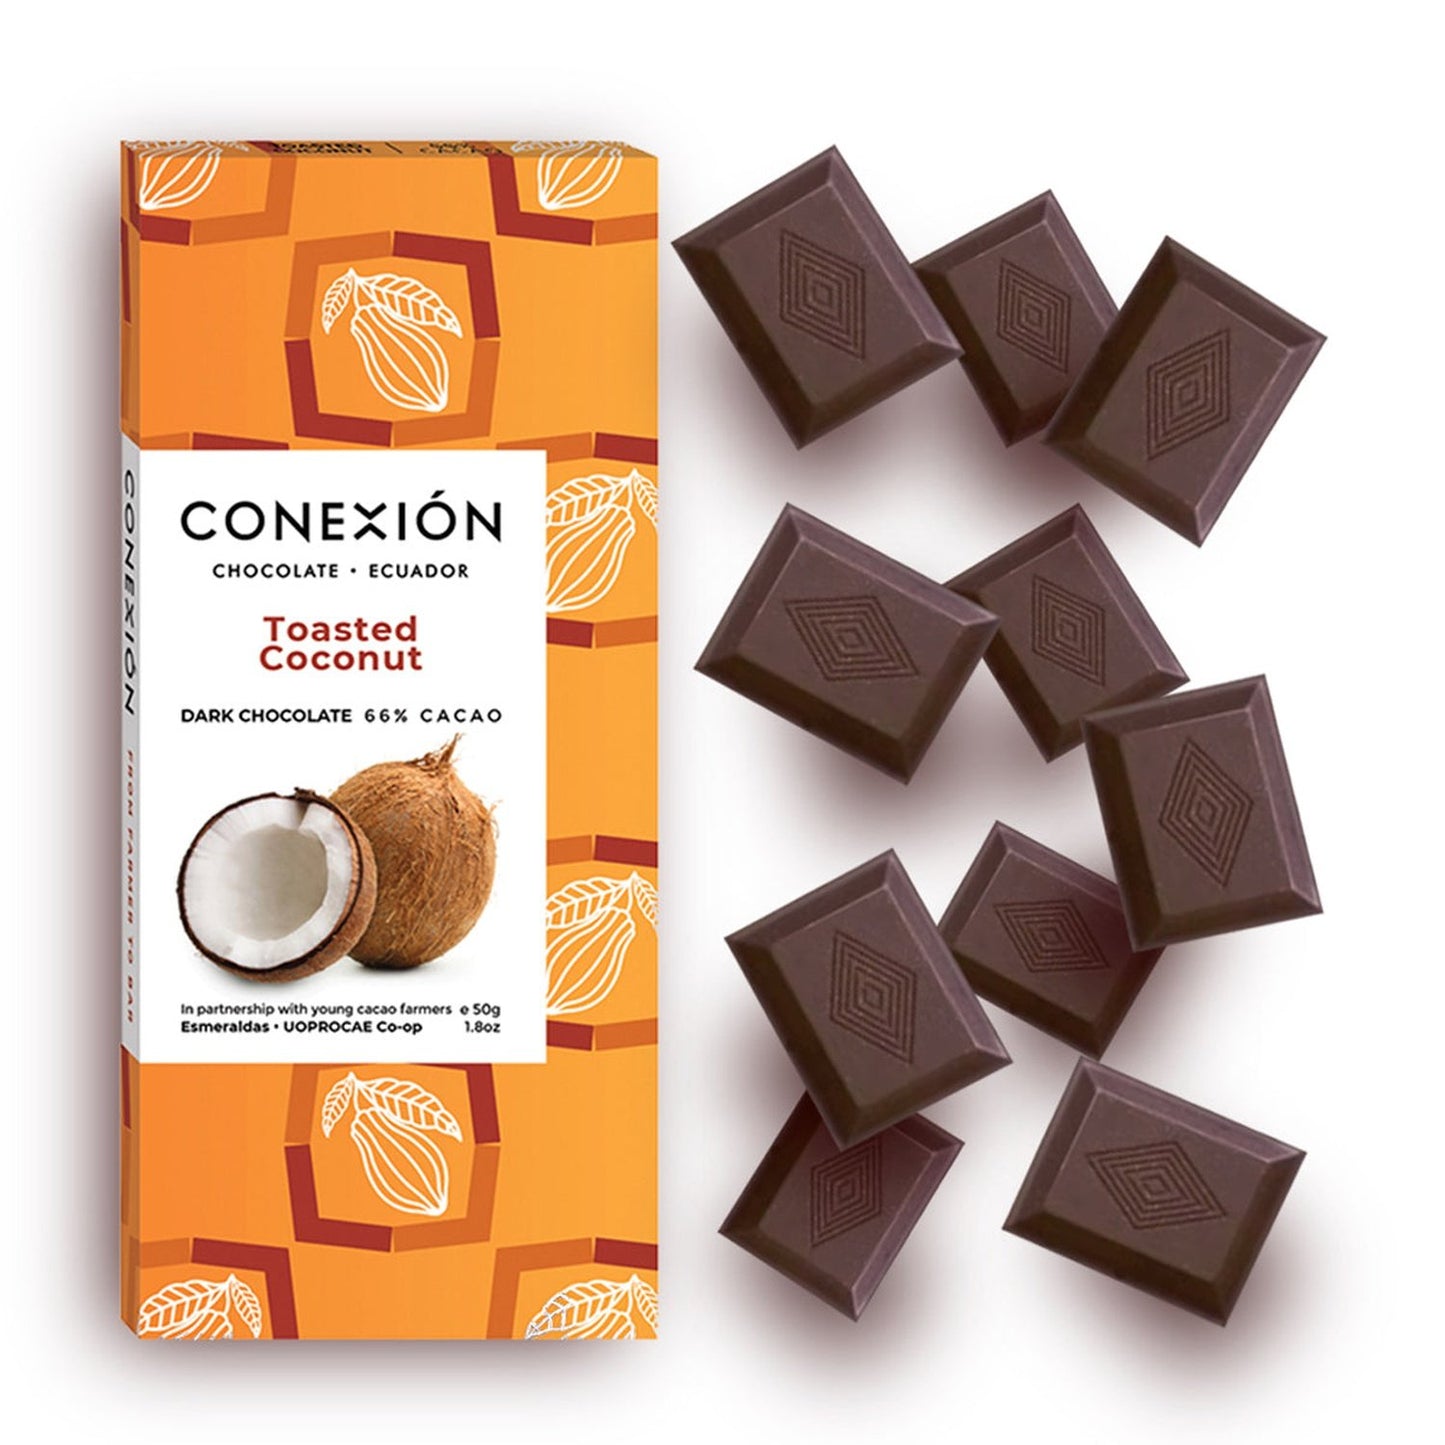 Conexión Toasted Coconut 66% Dark Chocolate Bar | Gluten Free, Vegan conexion-chocolates